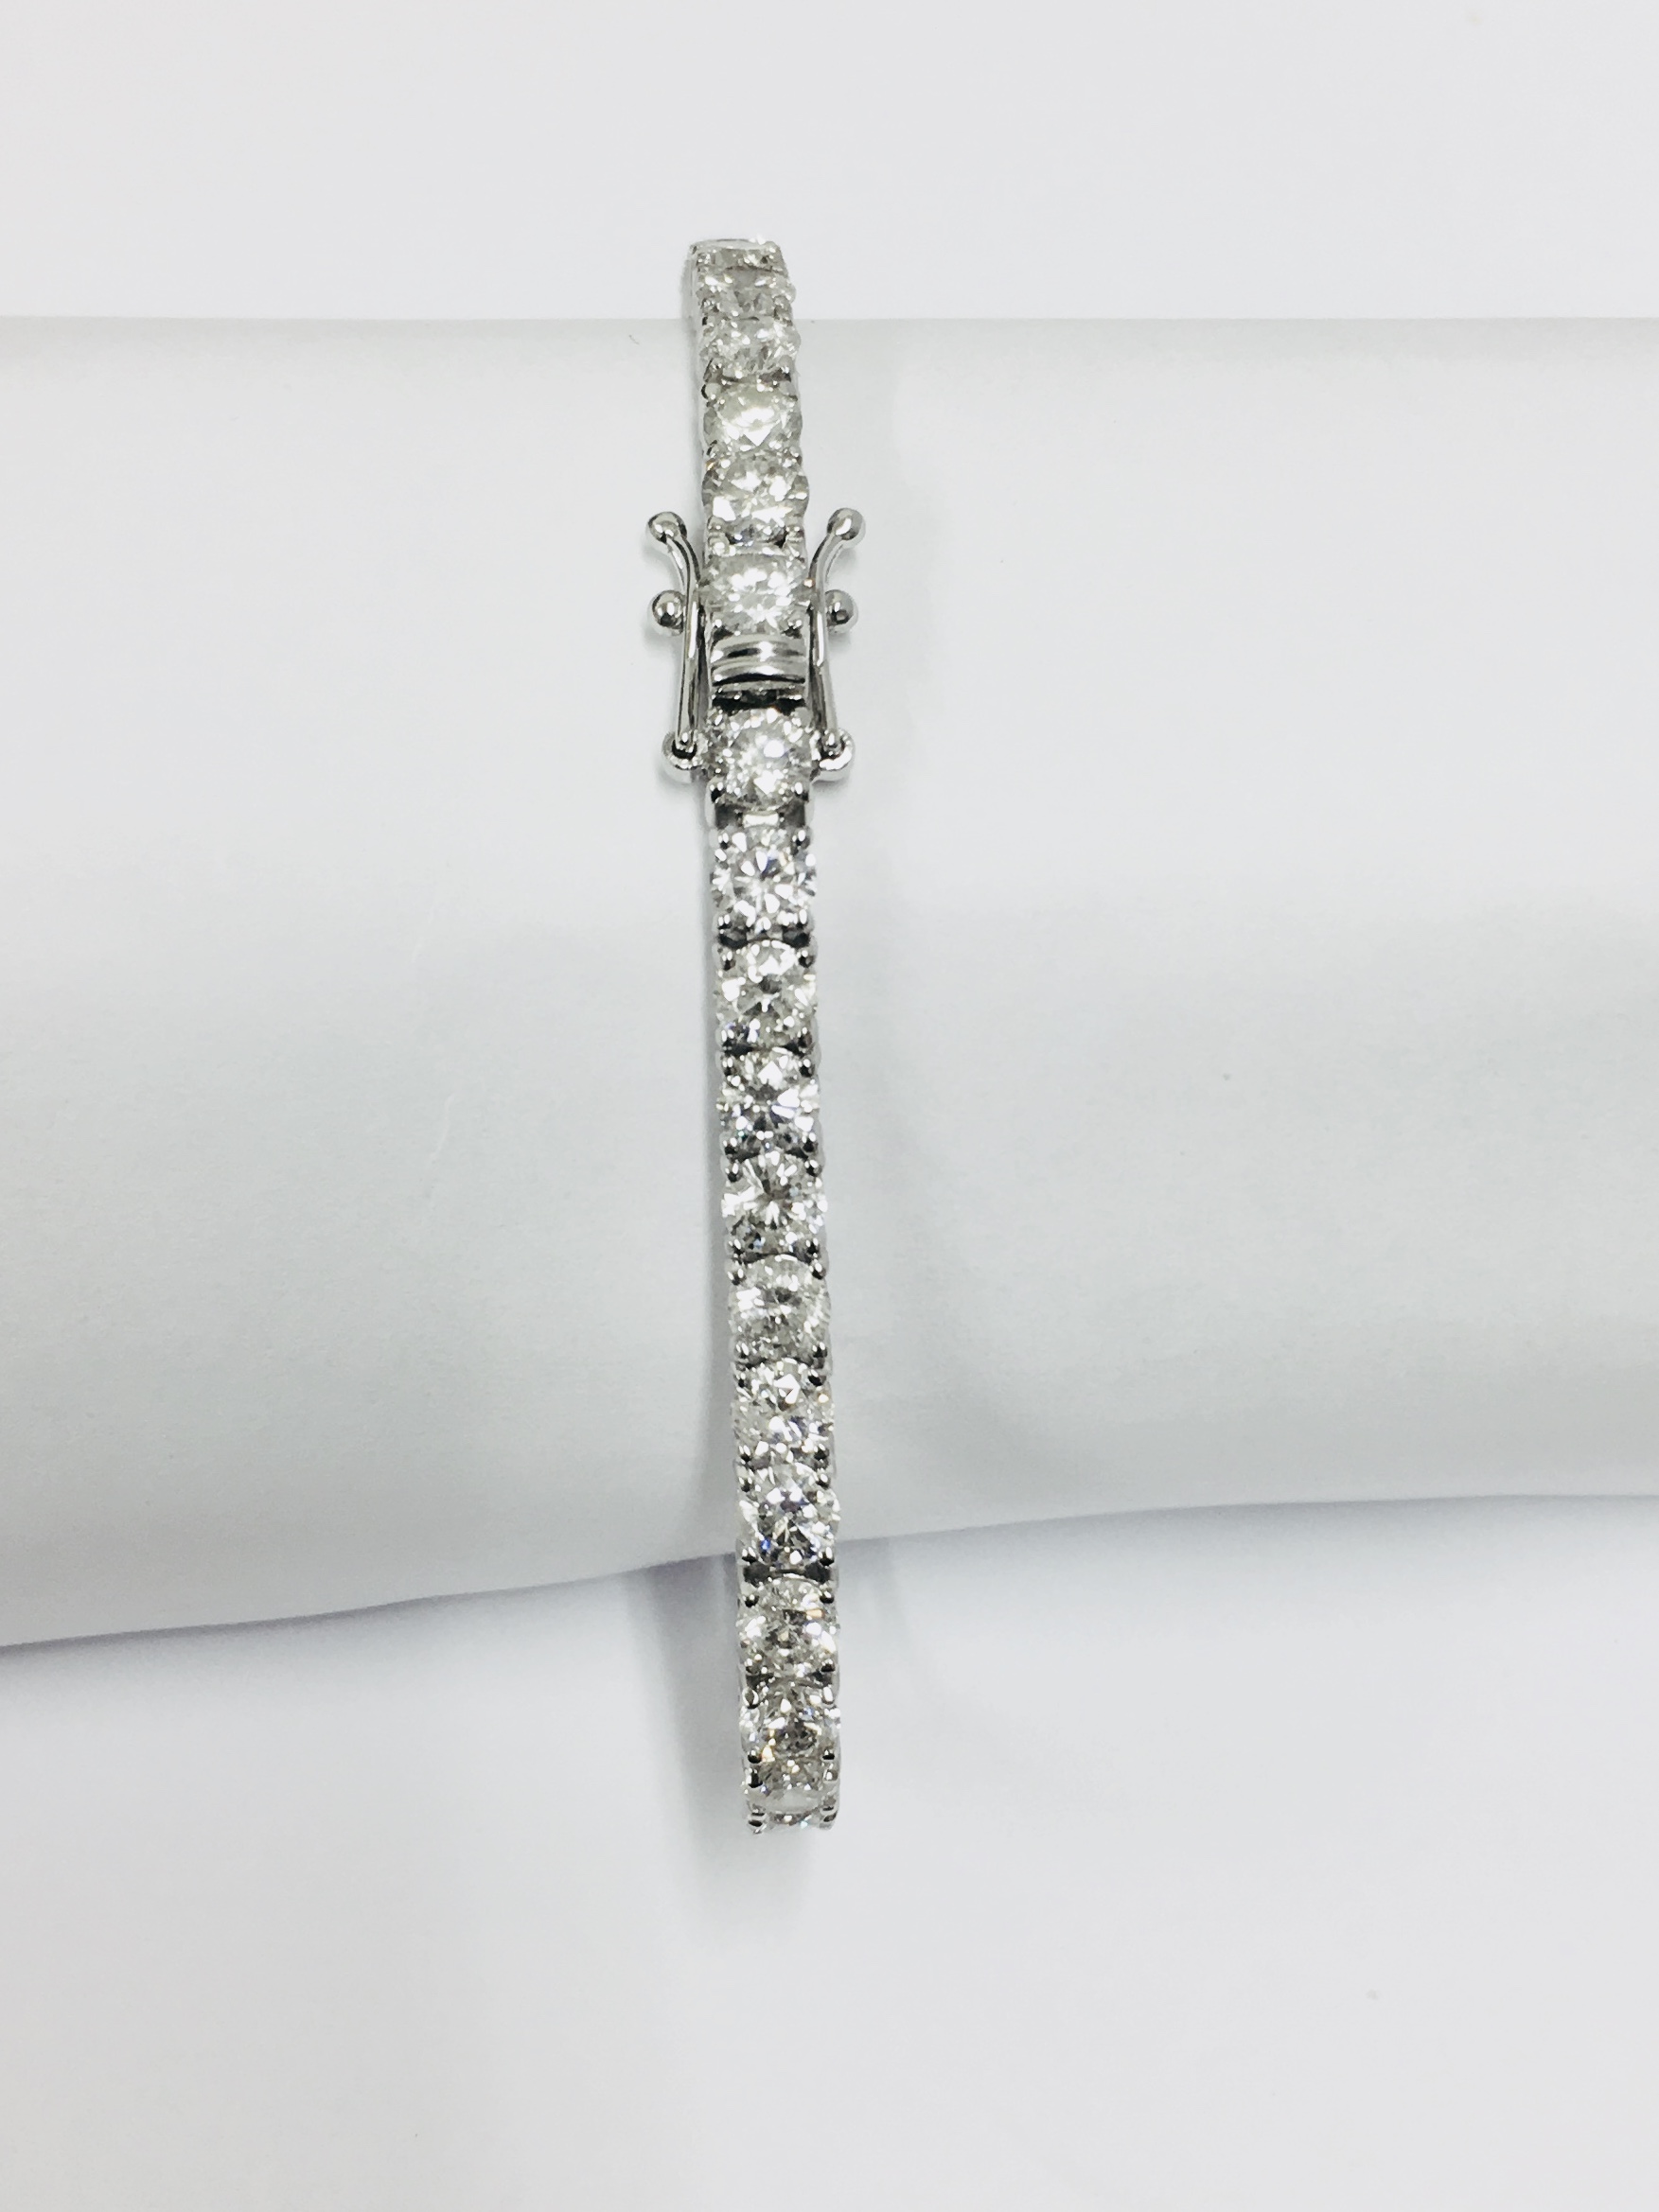 8.00ct Diamond tennis bracelet set with brilliant cut diamonds of G colour - Image 2 of 42